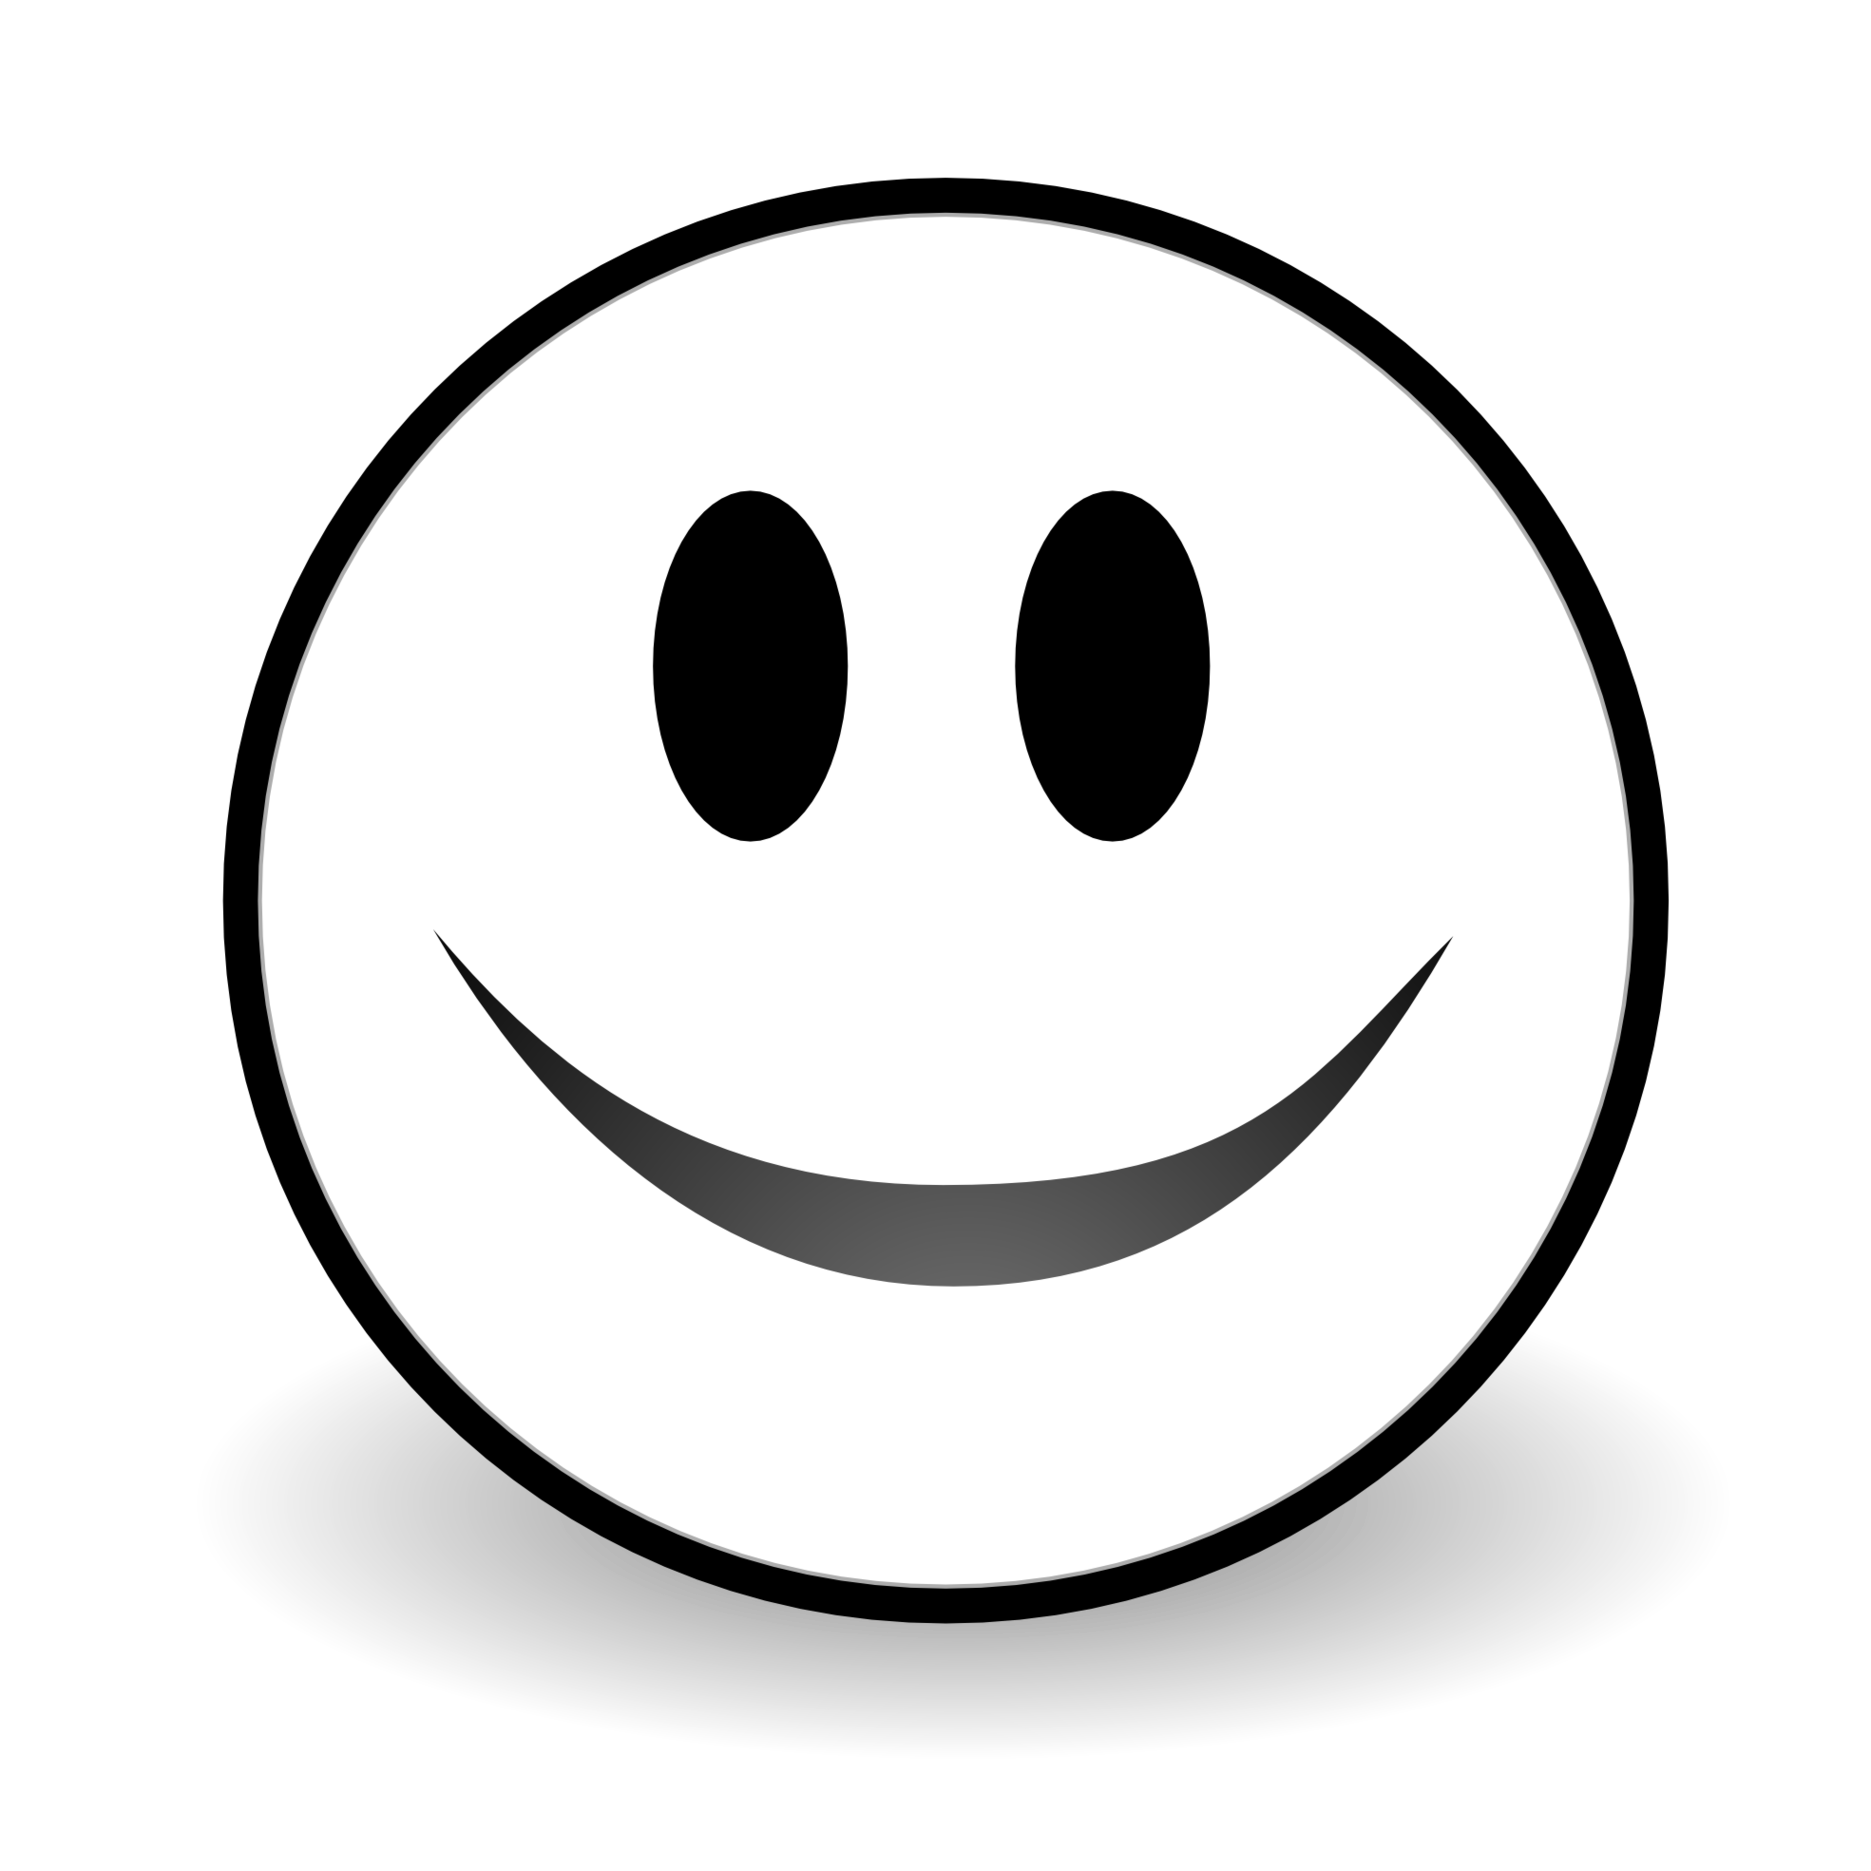 Black and white smile clipart - Smile Images Clip Art